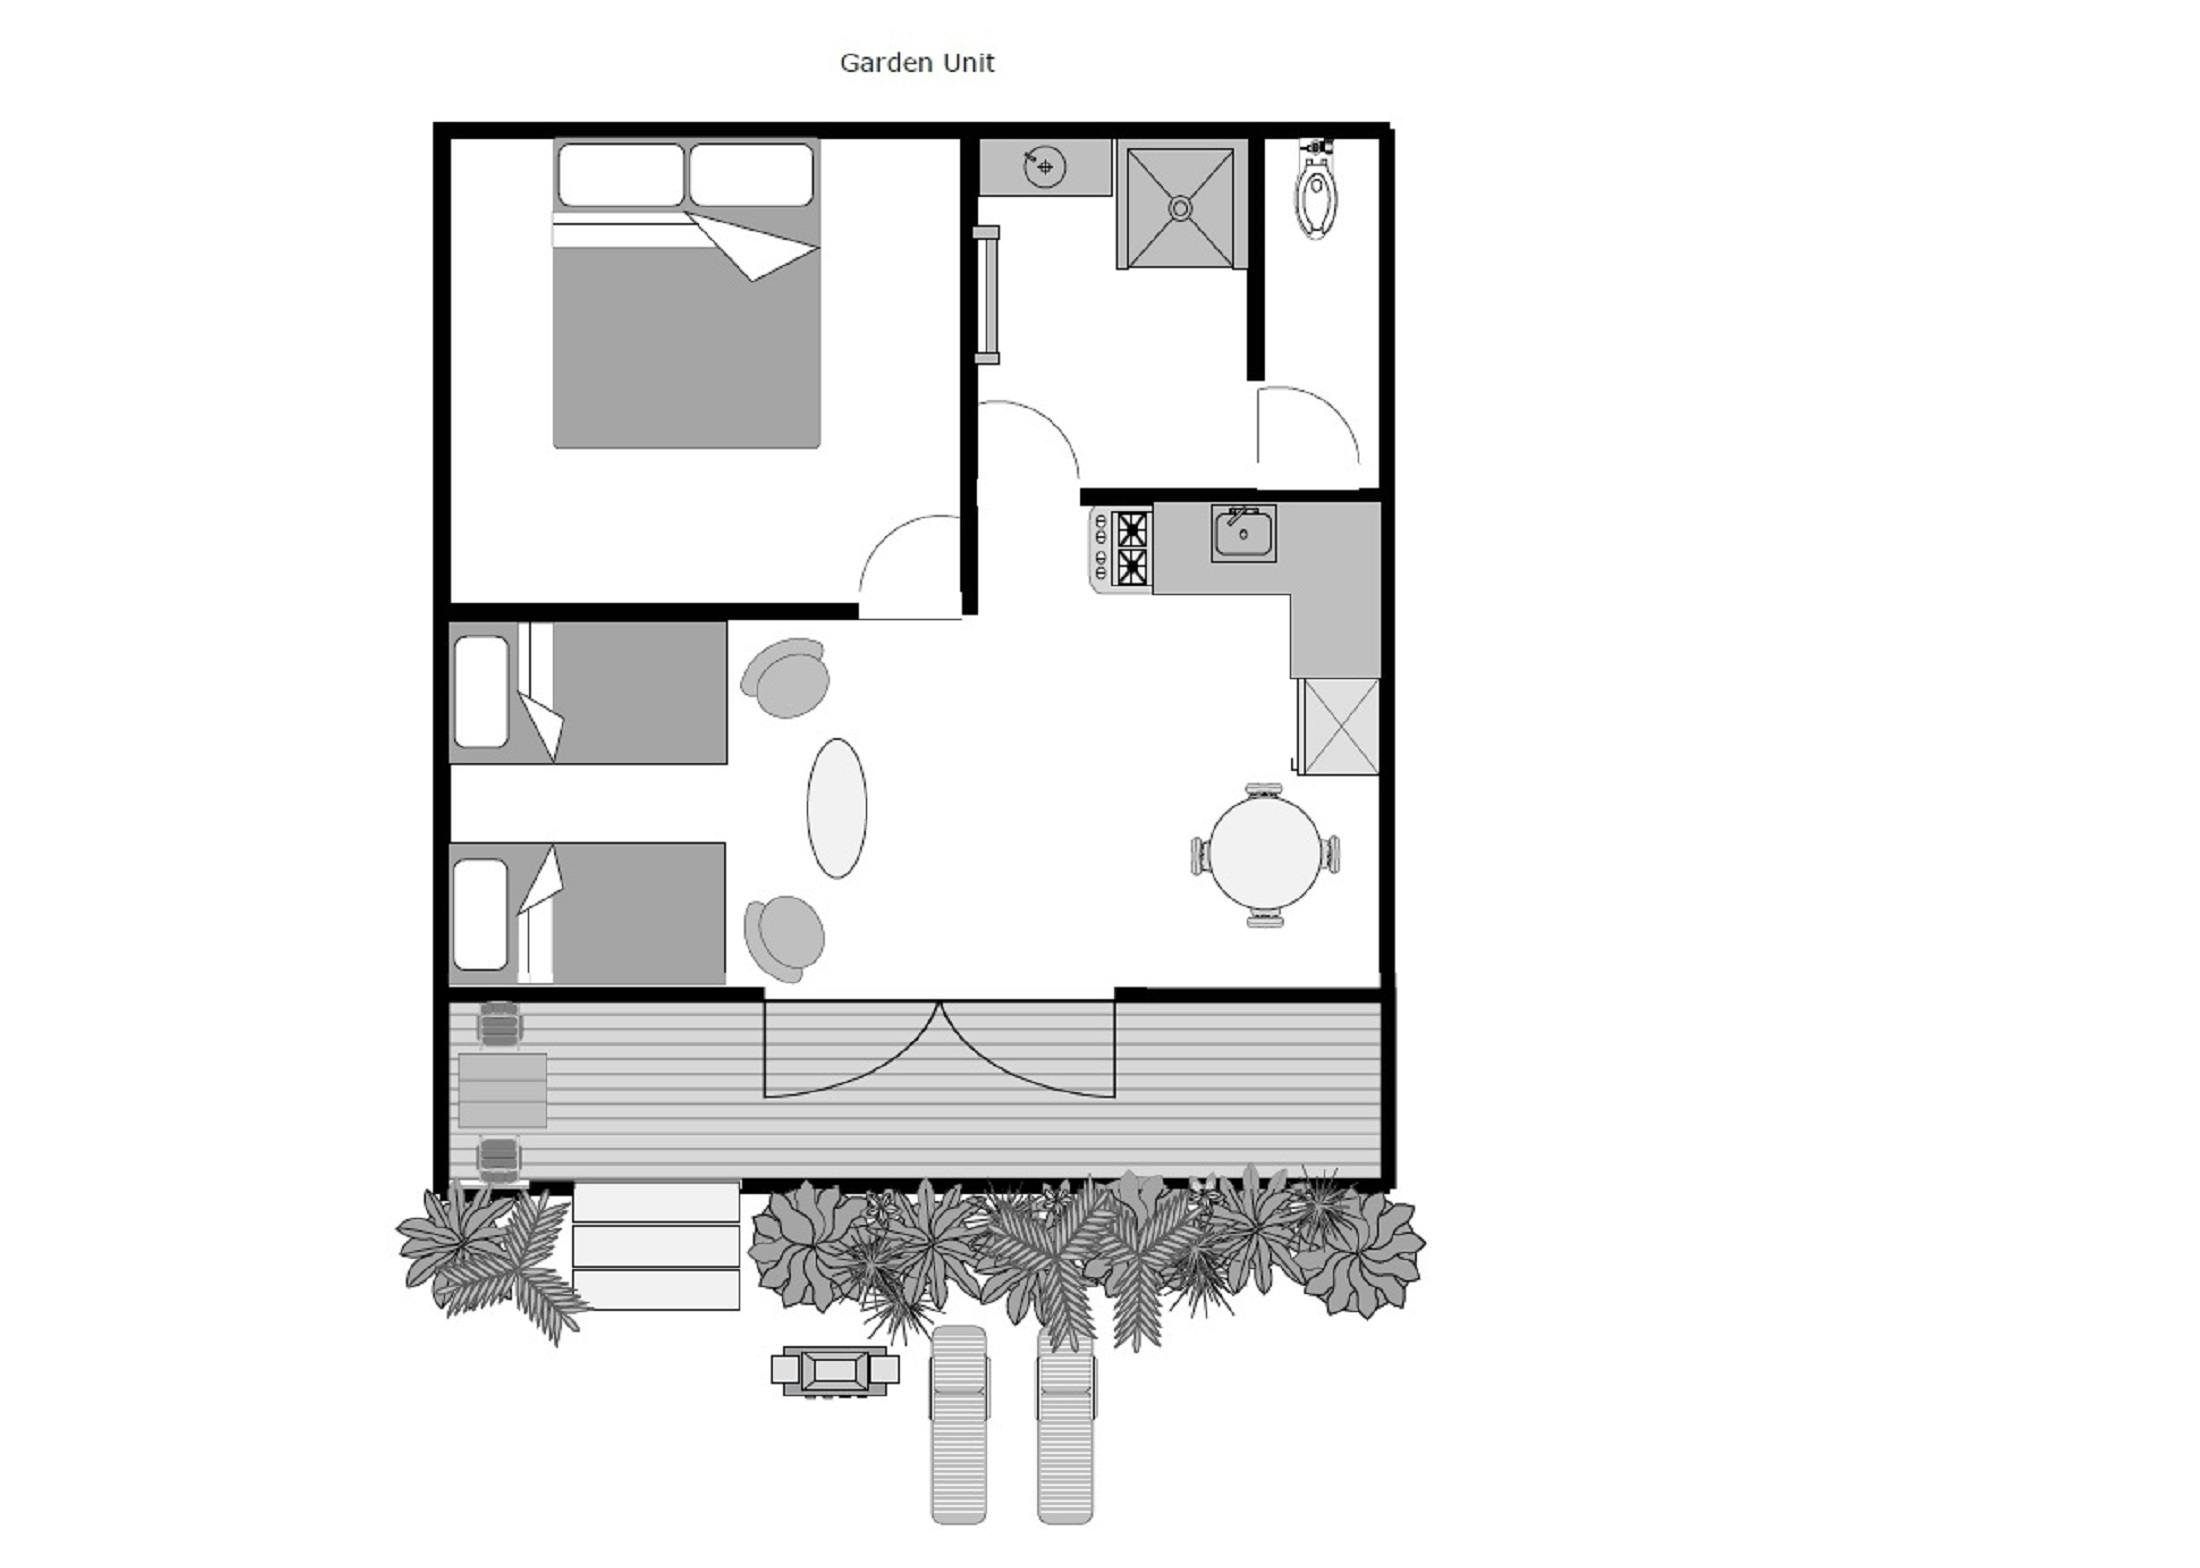 muri-beachcomber-rarotonga-garden-unit-floor-plan-layout